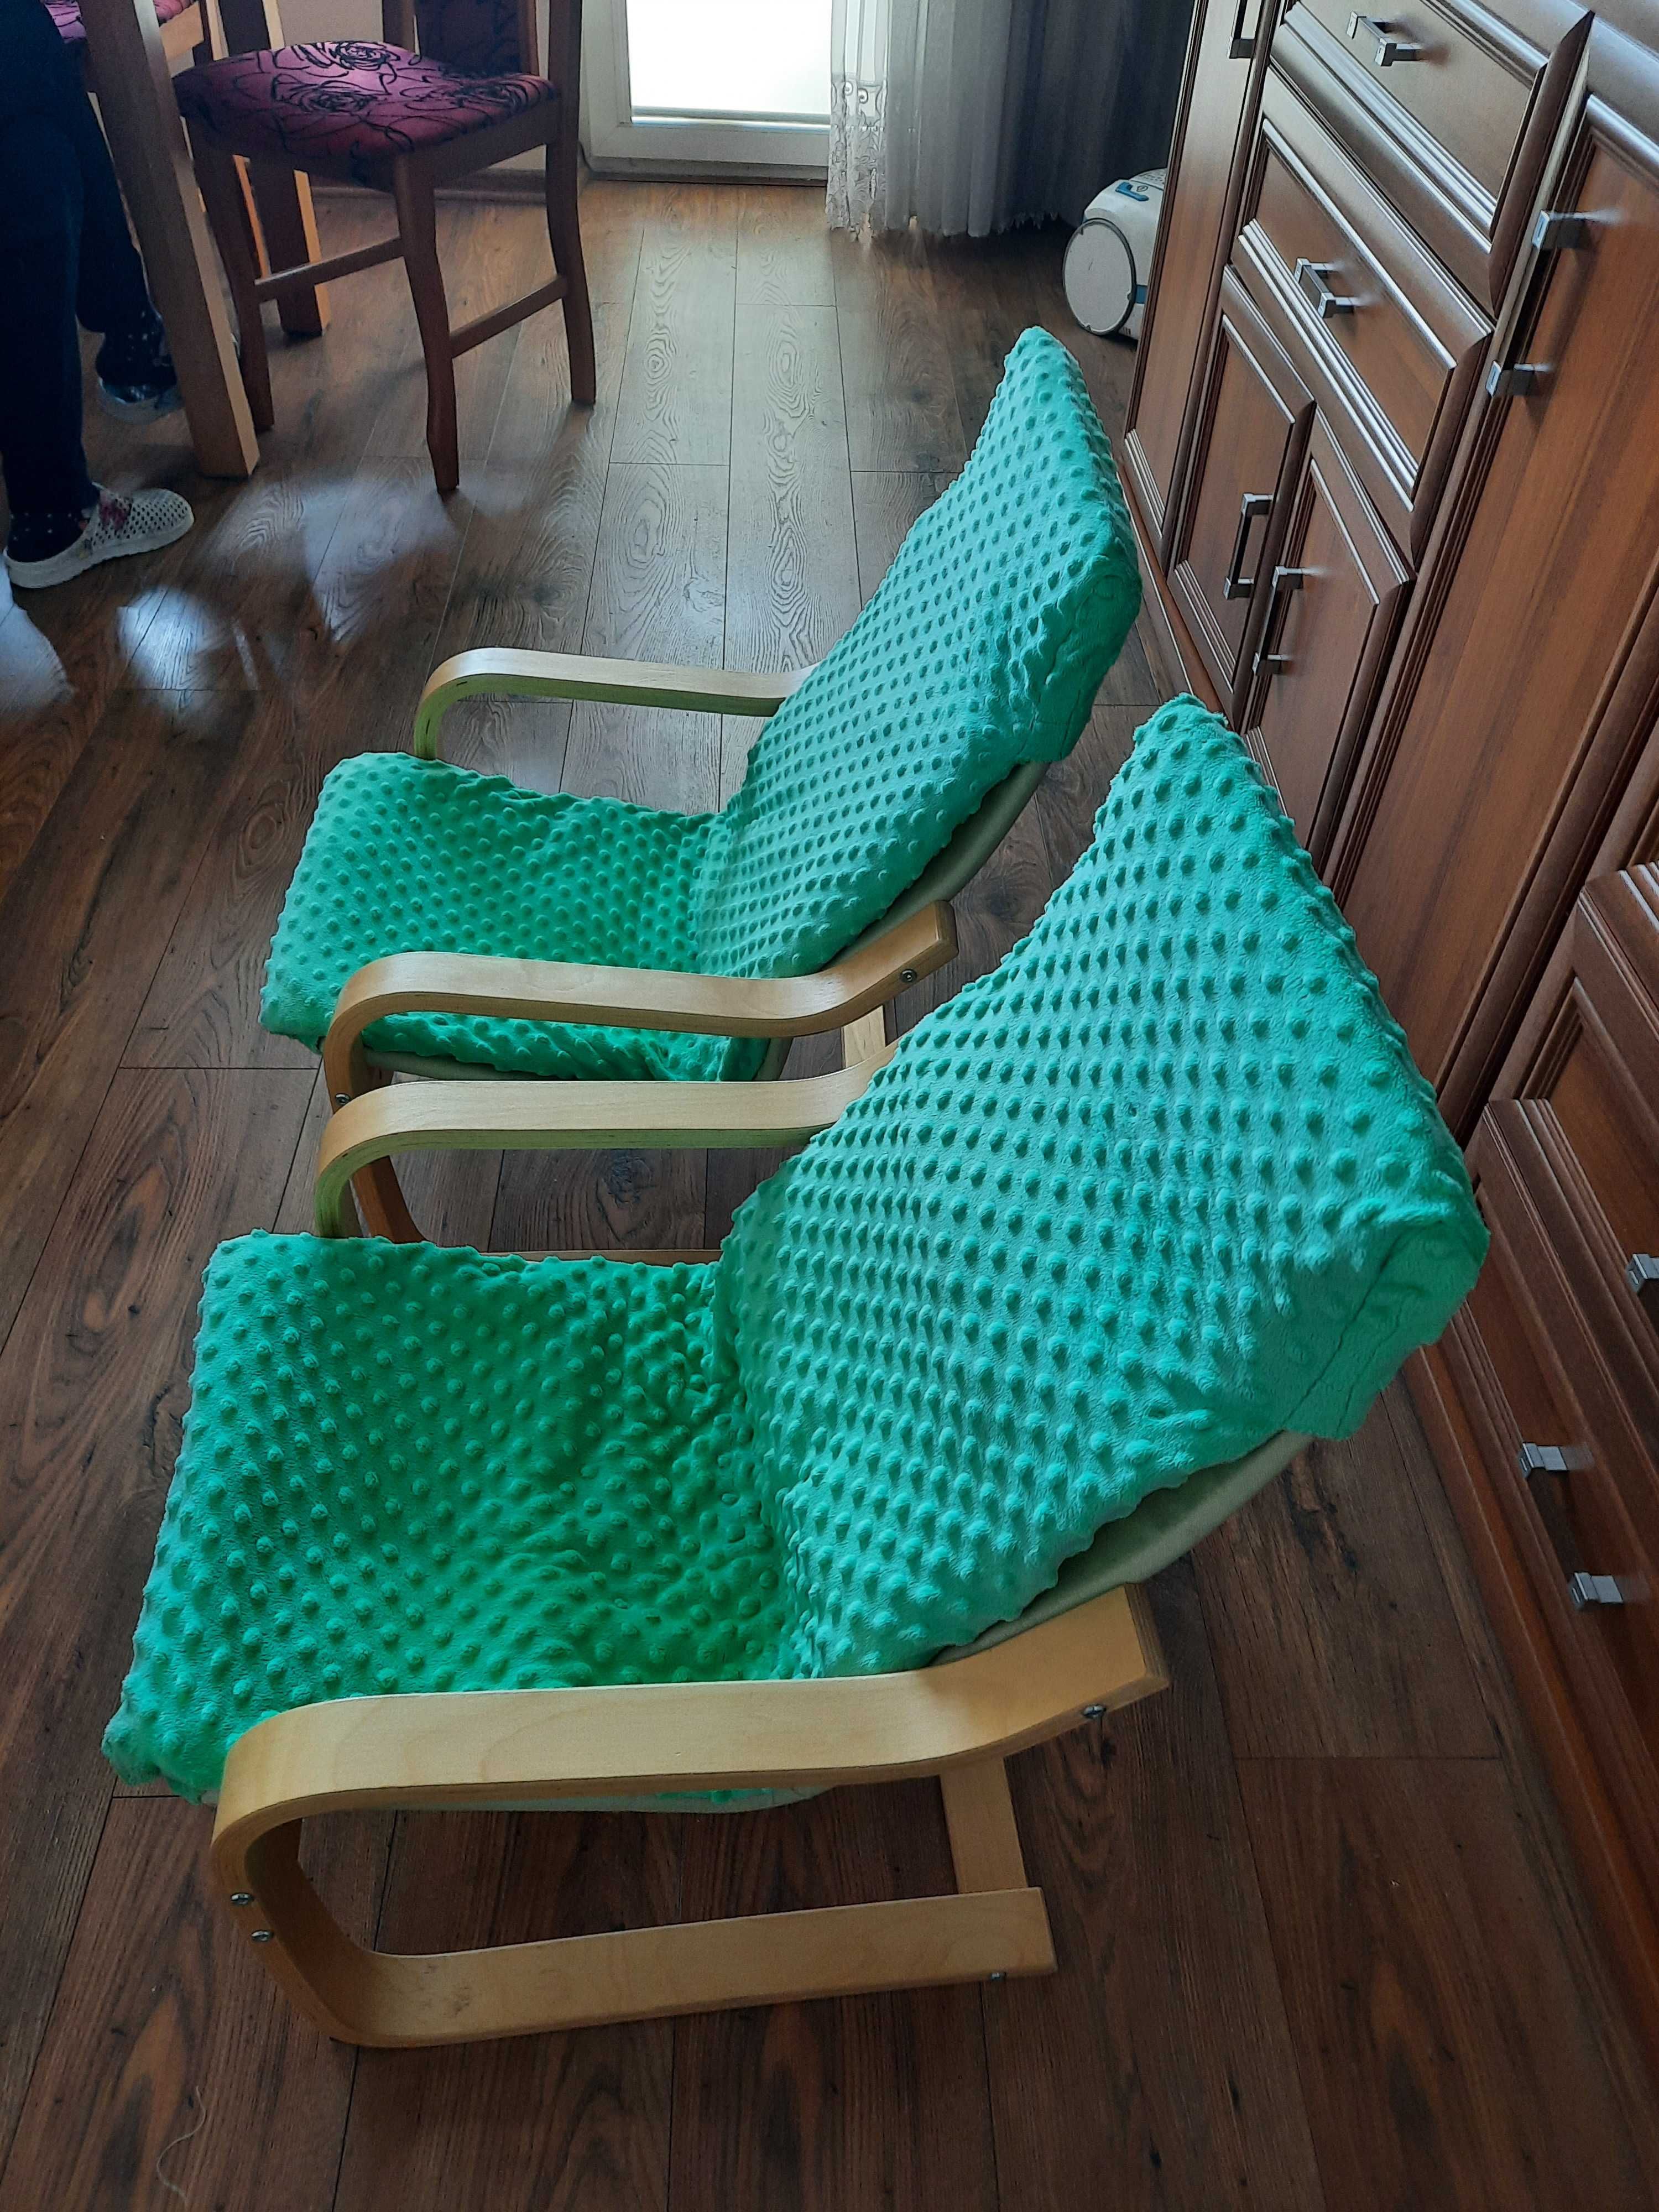 Krzesełka IKEA POANG